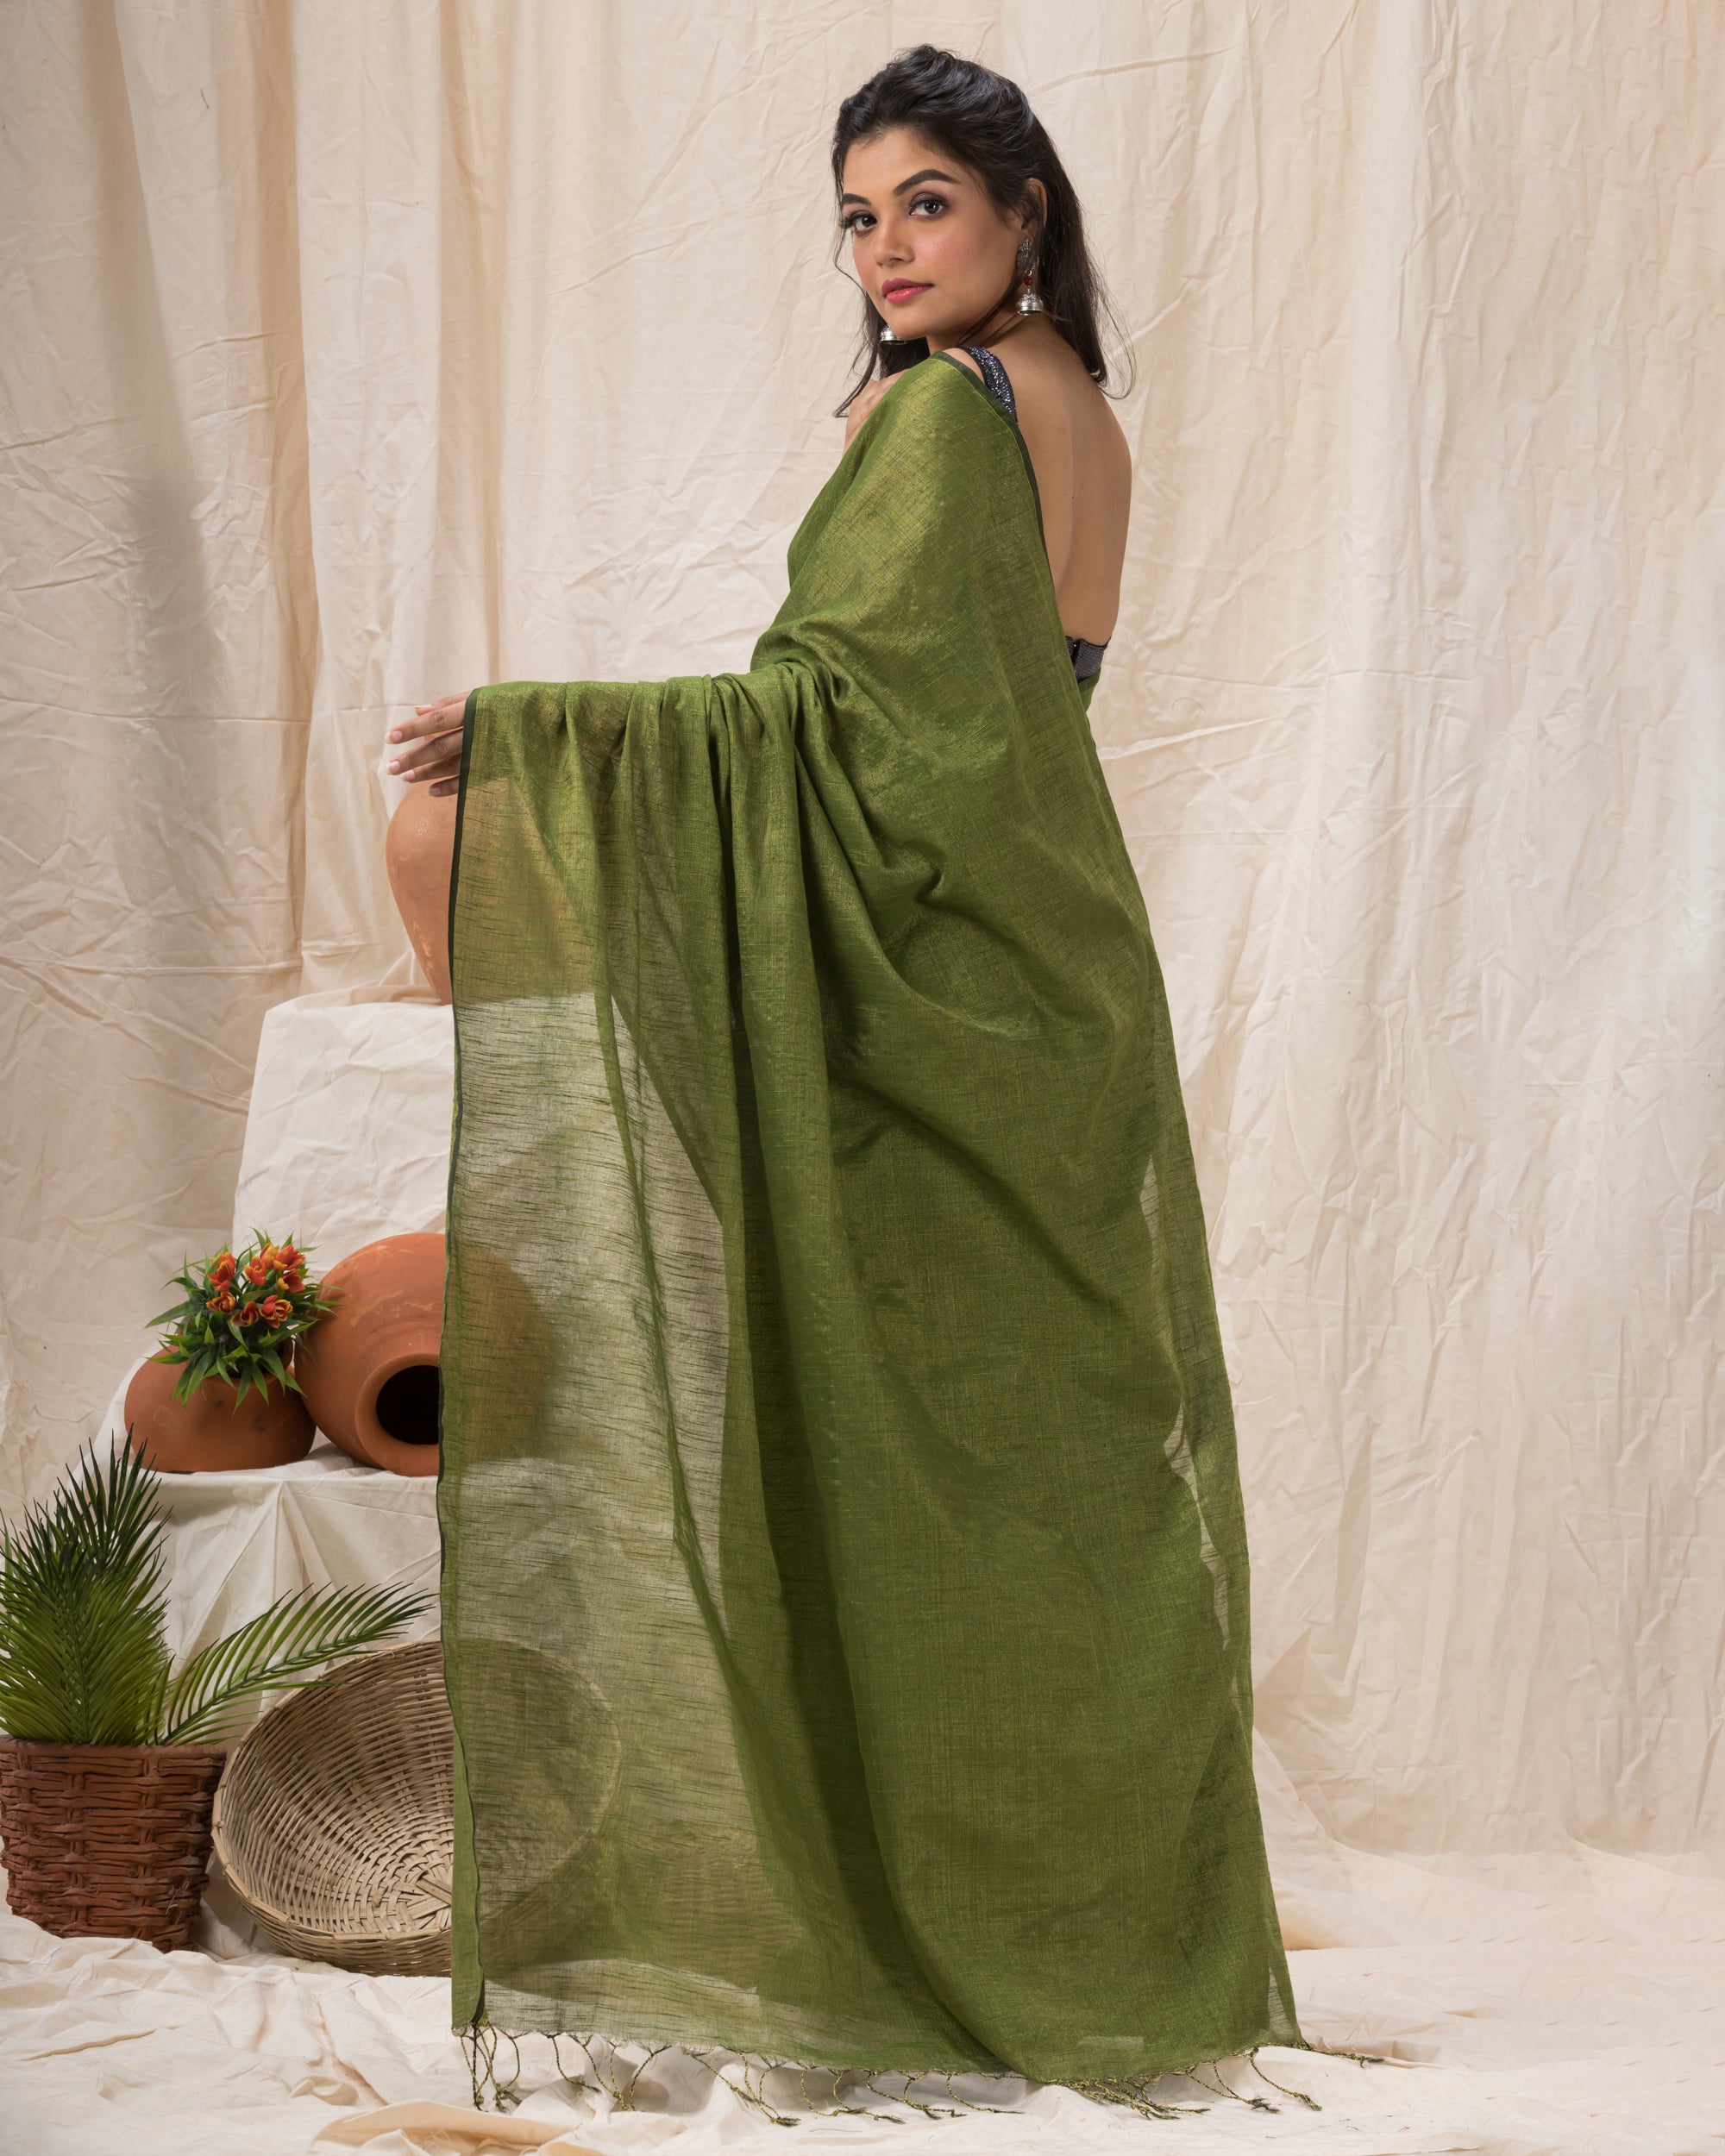 Women's Olive Green Hand Woven Cotton Blend Tissue Saree - Piyari Fashion